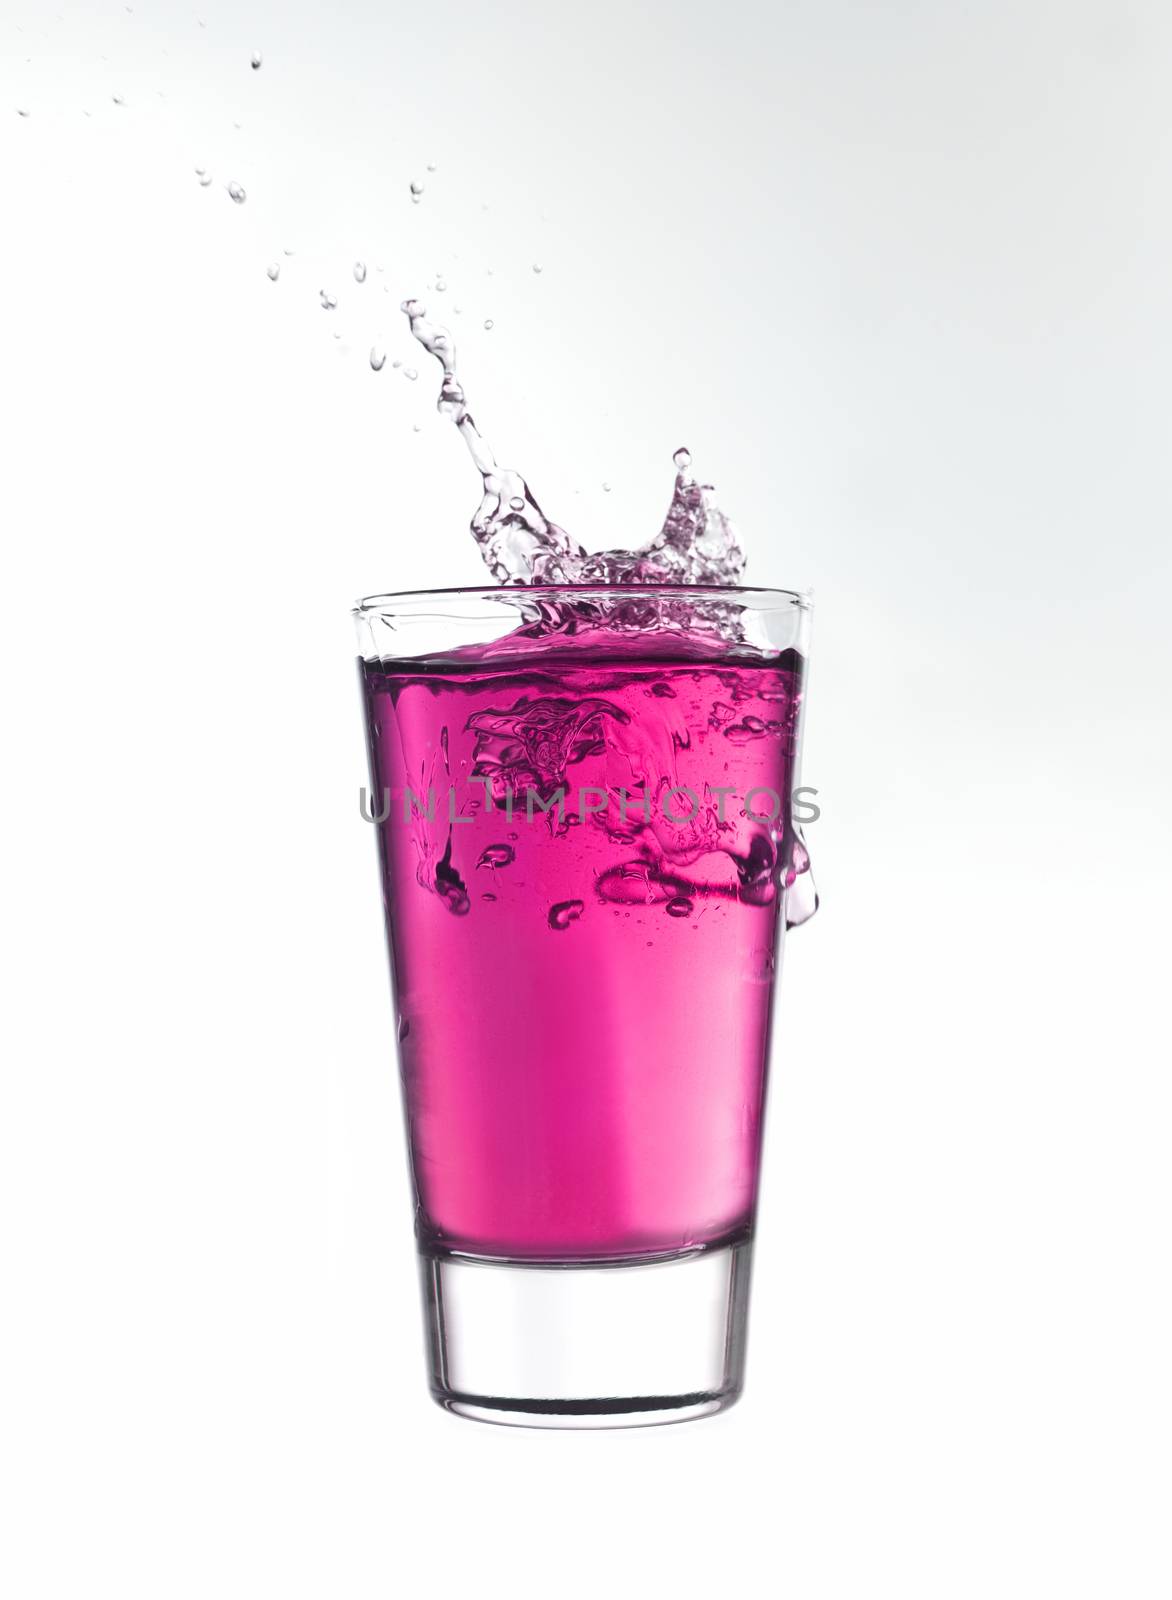 Splash in a glass of pink lemonade by gemenacom